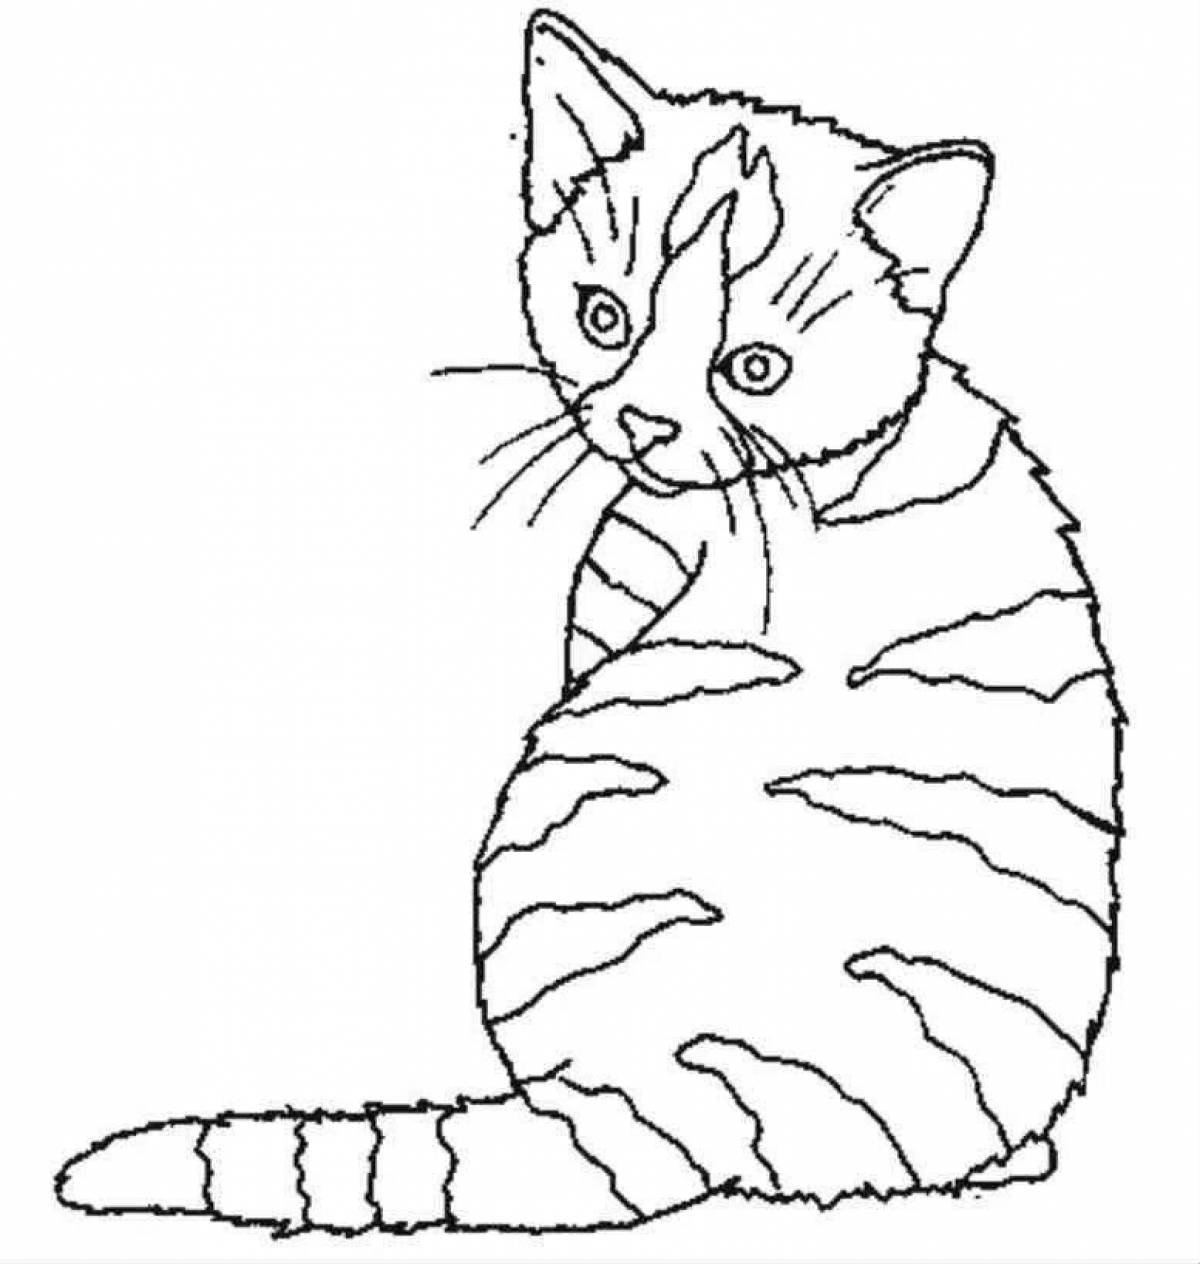 Coloring book brave kitten cat